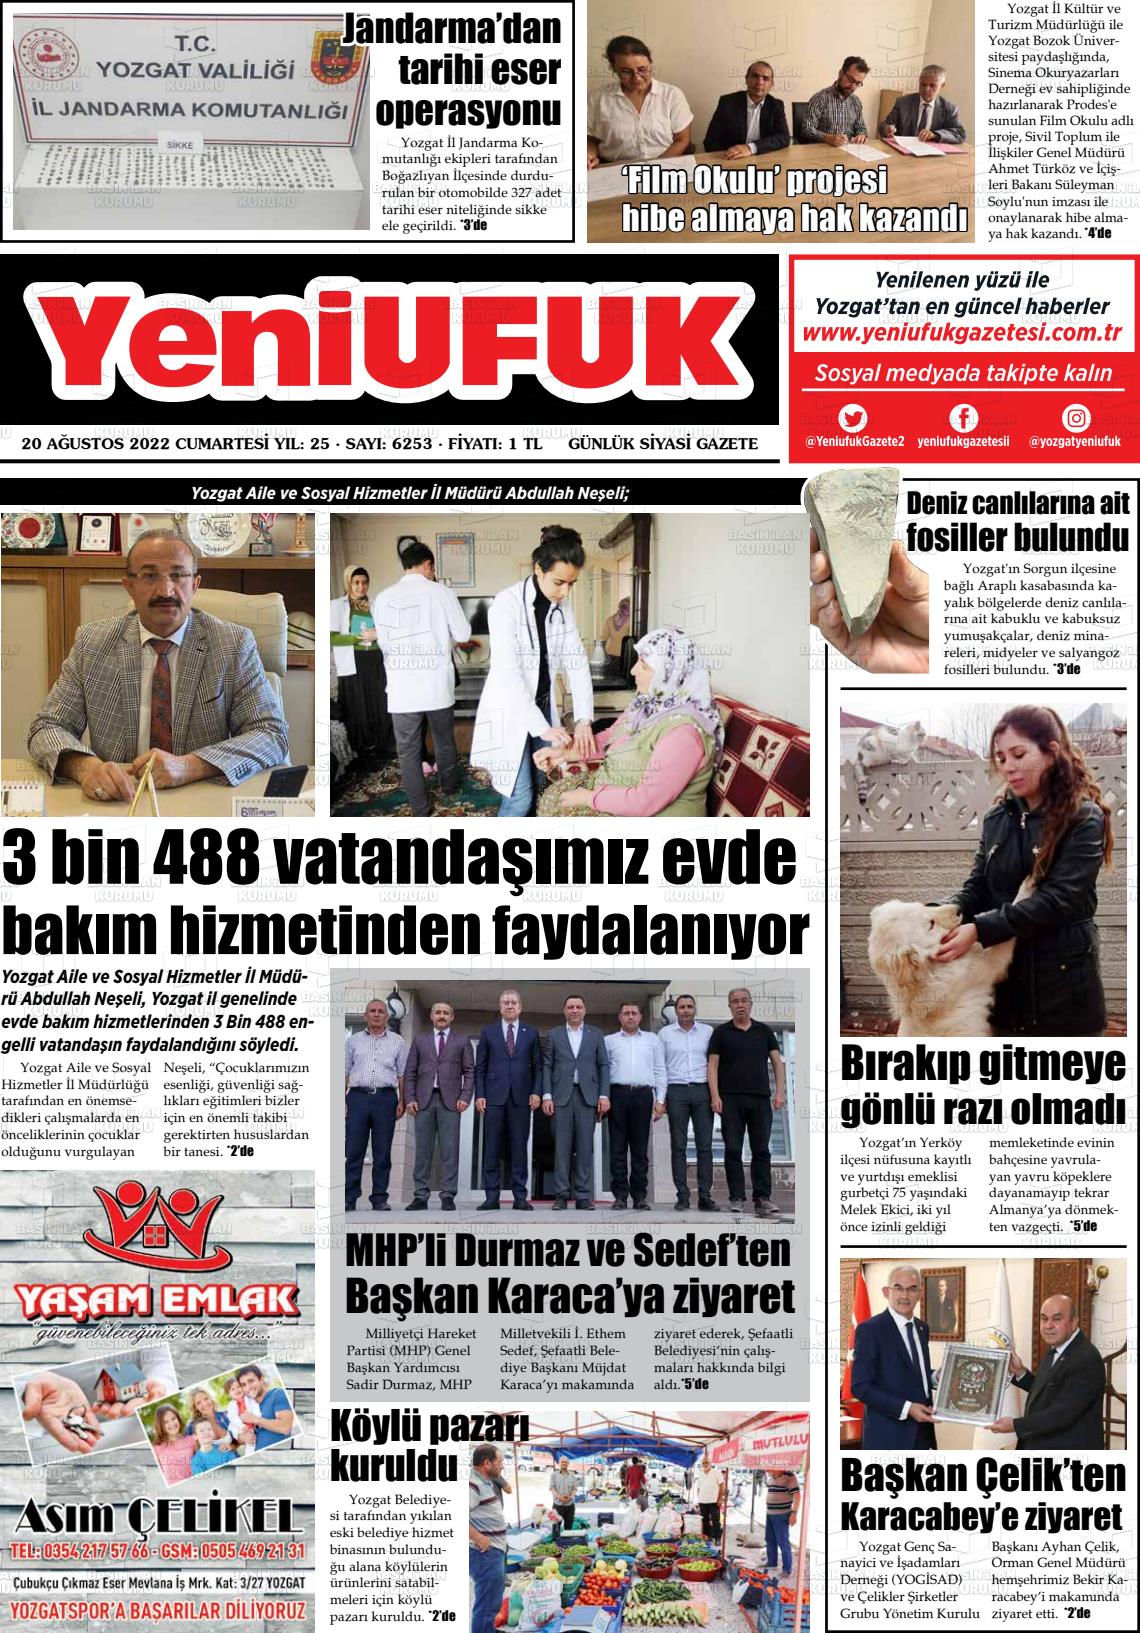 20 Ağustos 2022 Yozgat Yeni Ufuk Gazete Manşeti